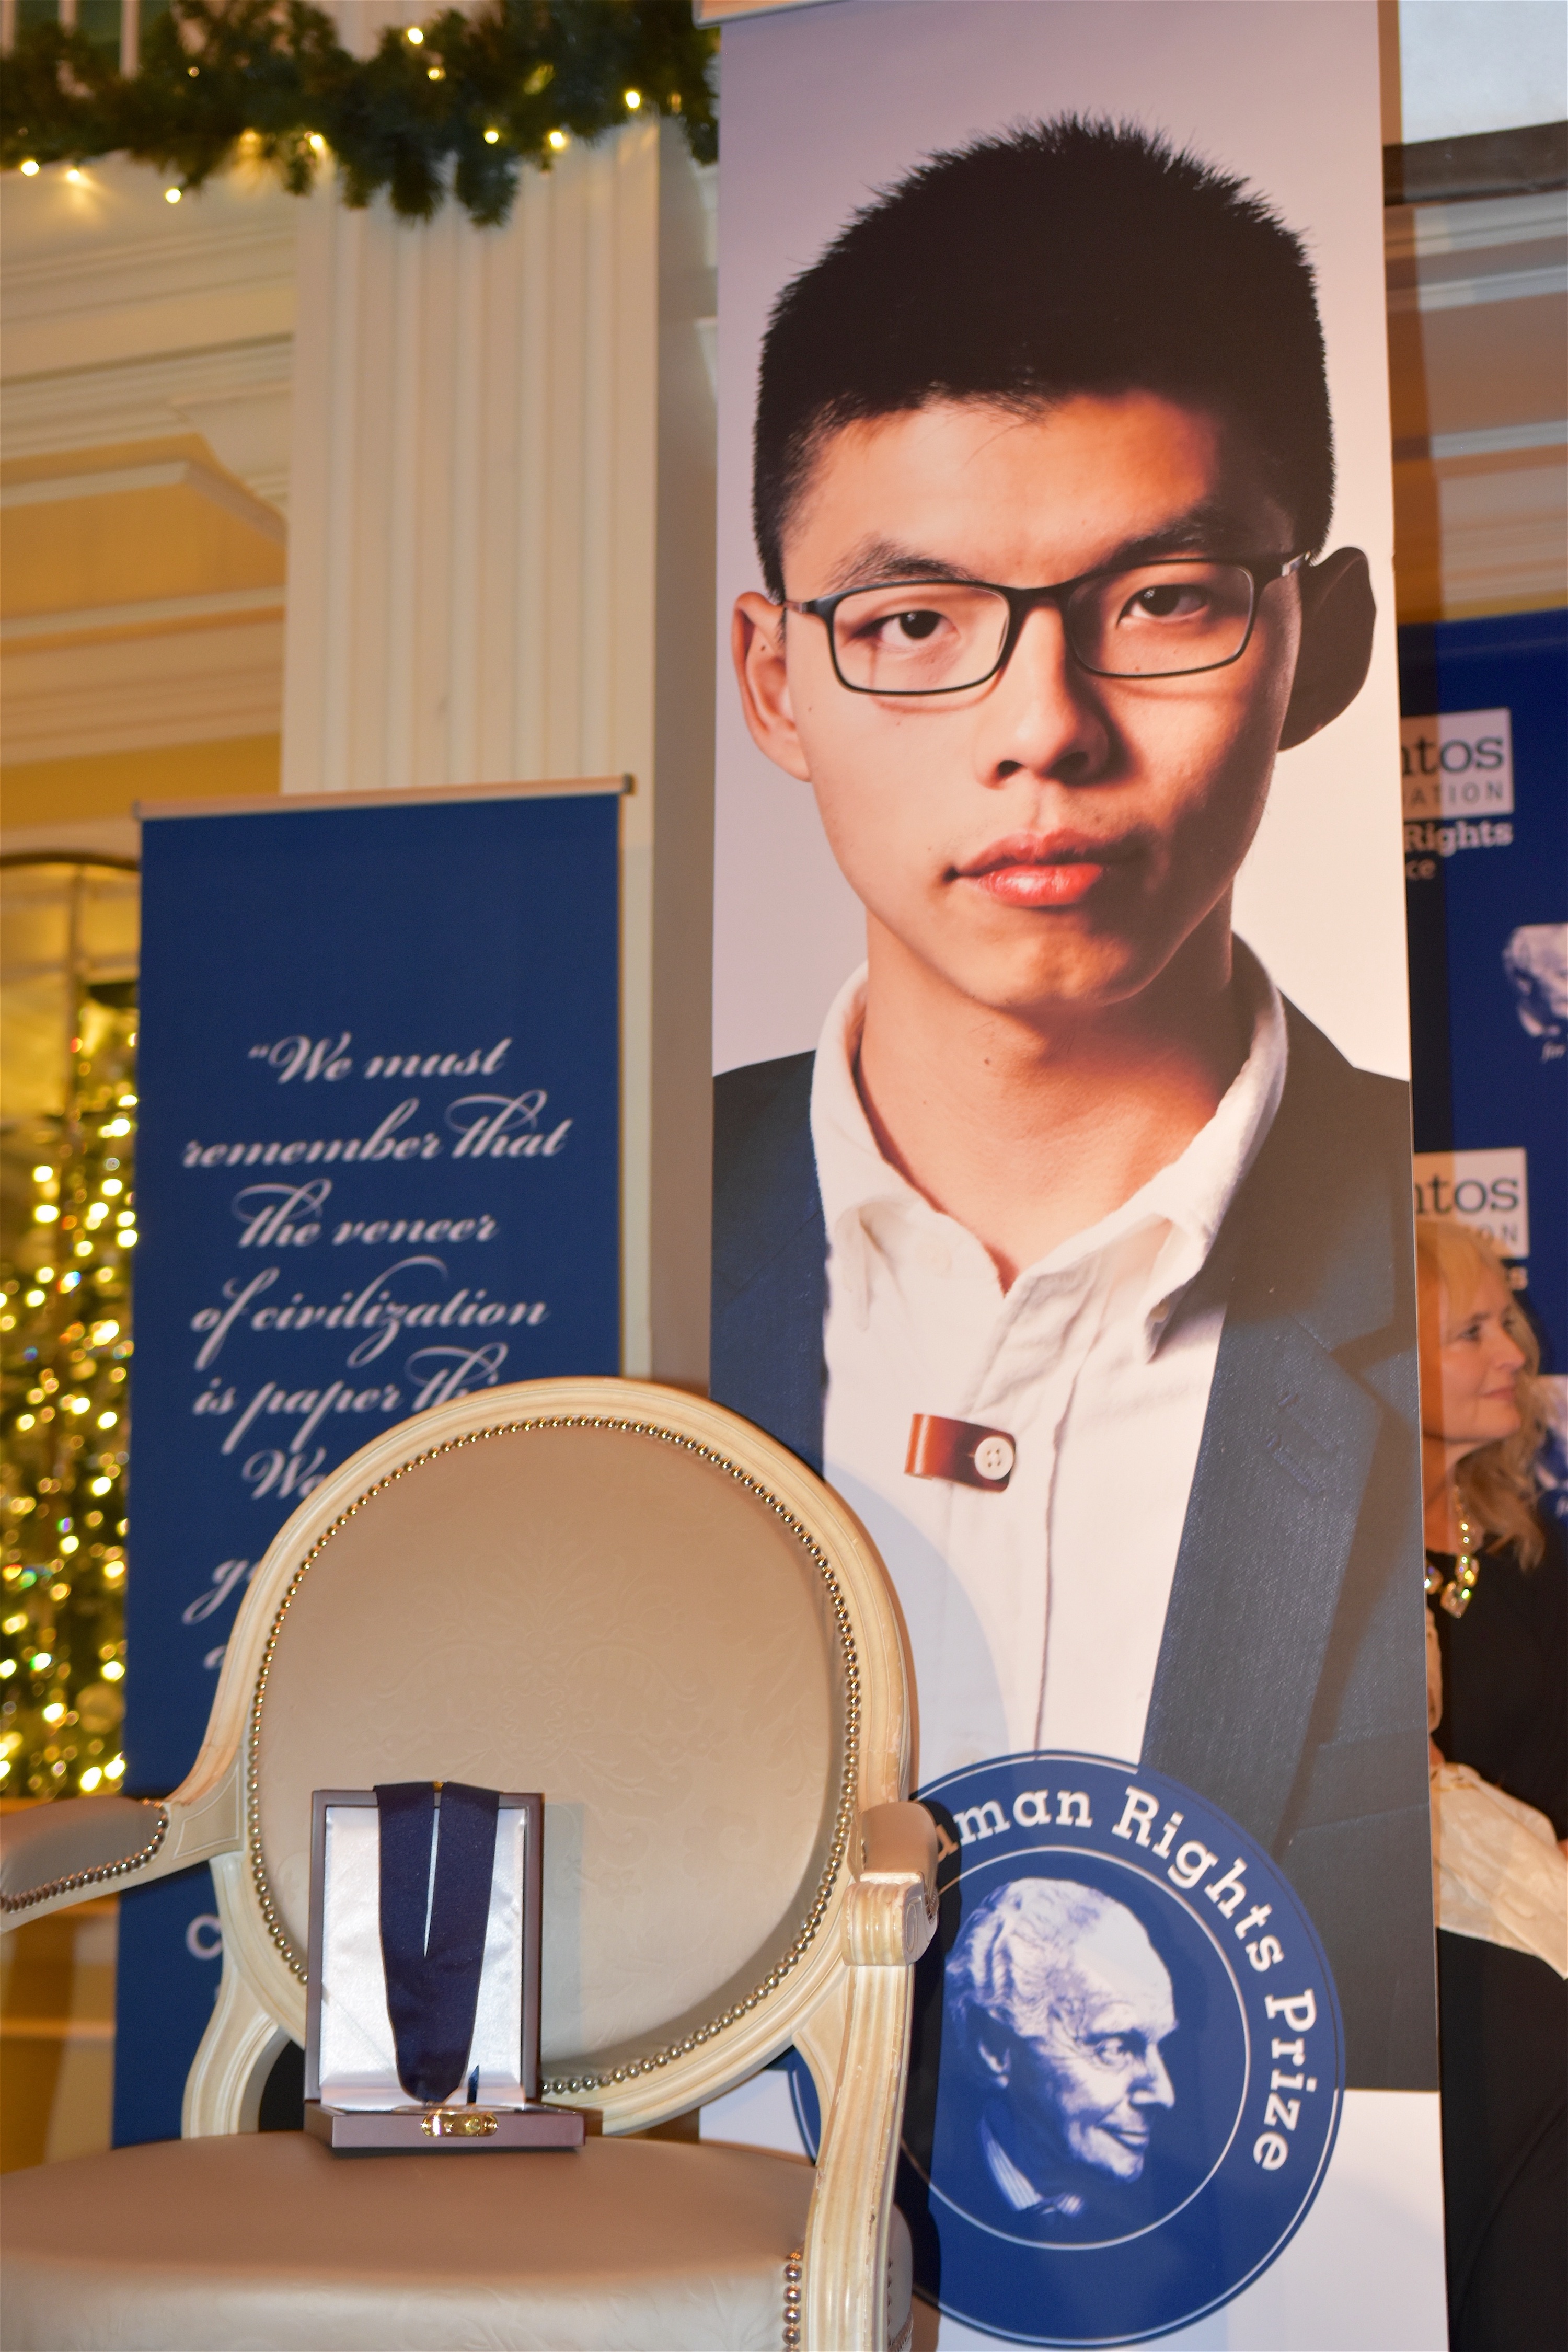 Joshua Wong's Lantos Prize Award Hangs on His Empty Chair